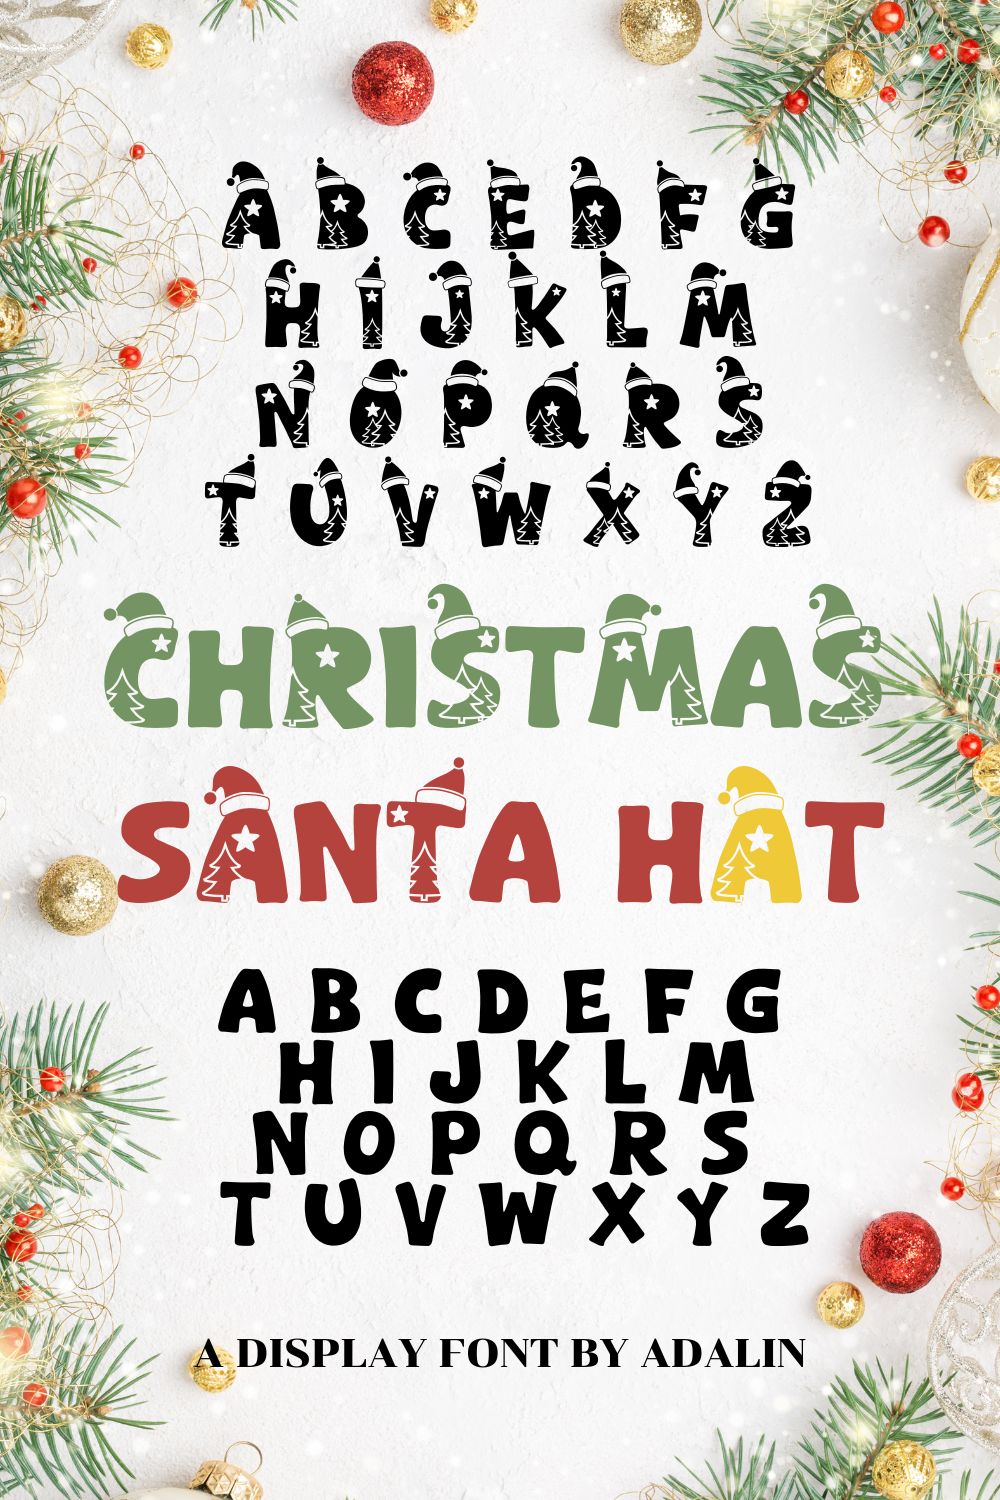 Christmas Santa Hat Display Font pinterest preview image.